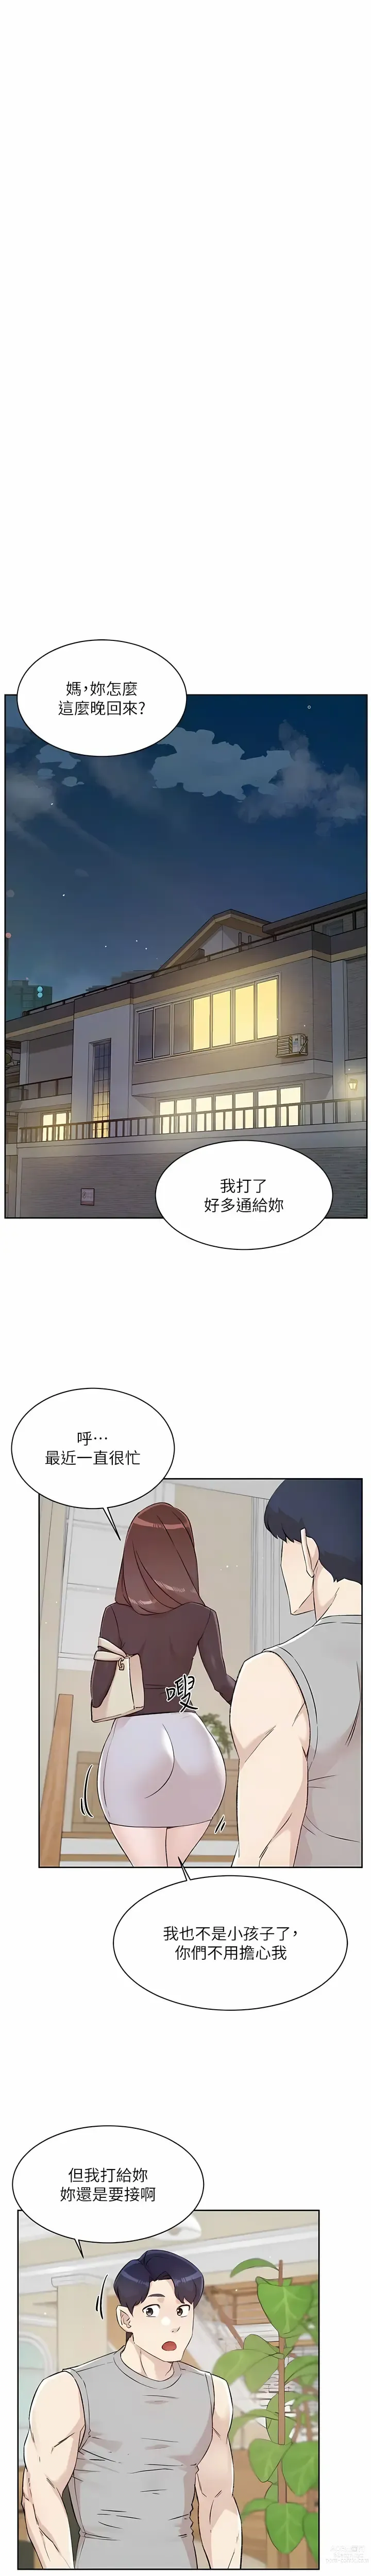 Page 815 of manga 好友的私生活